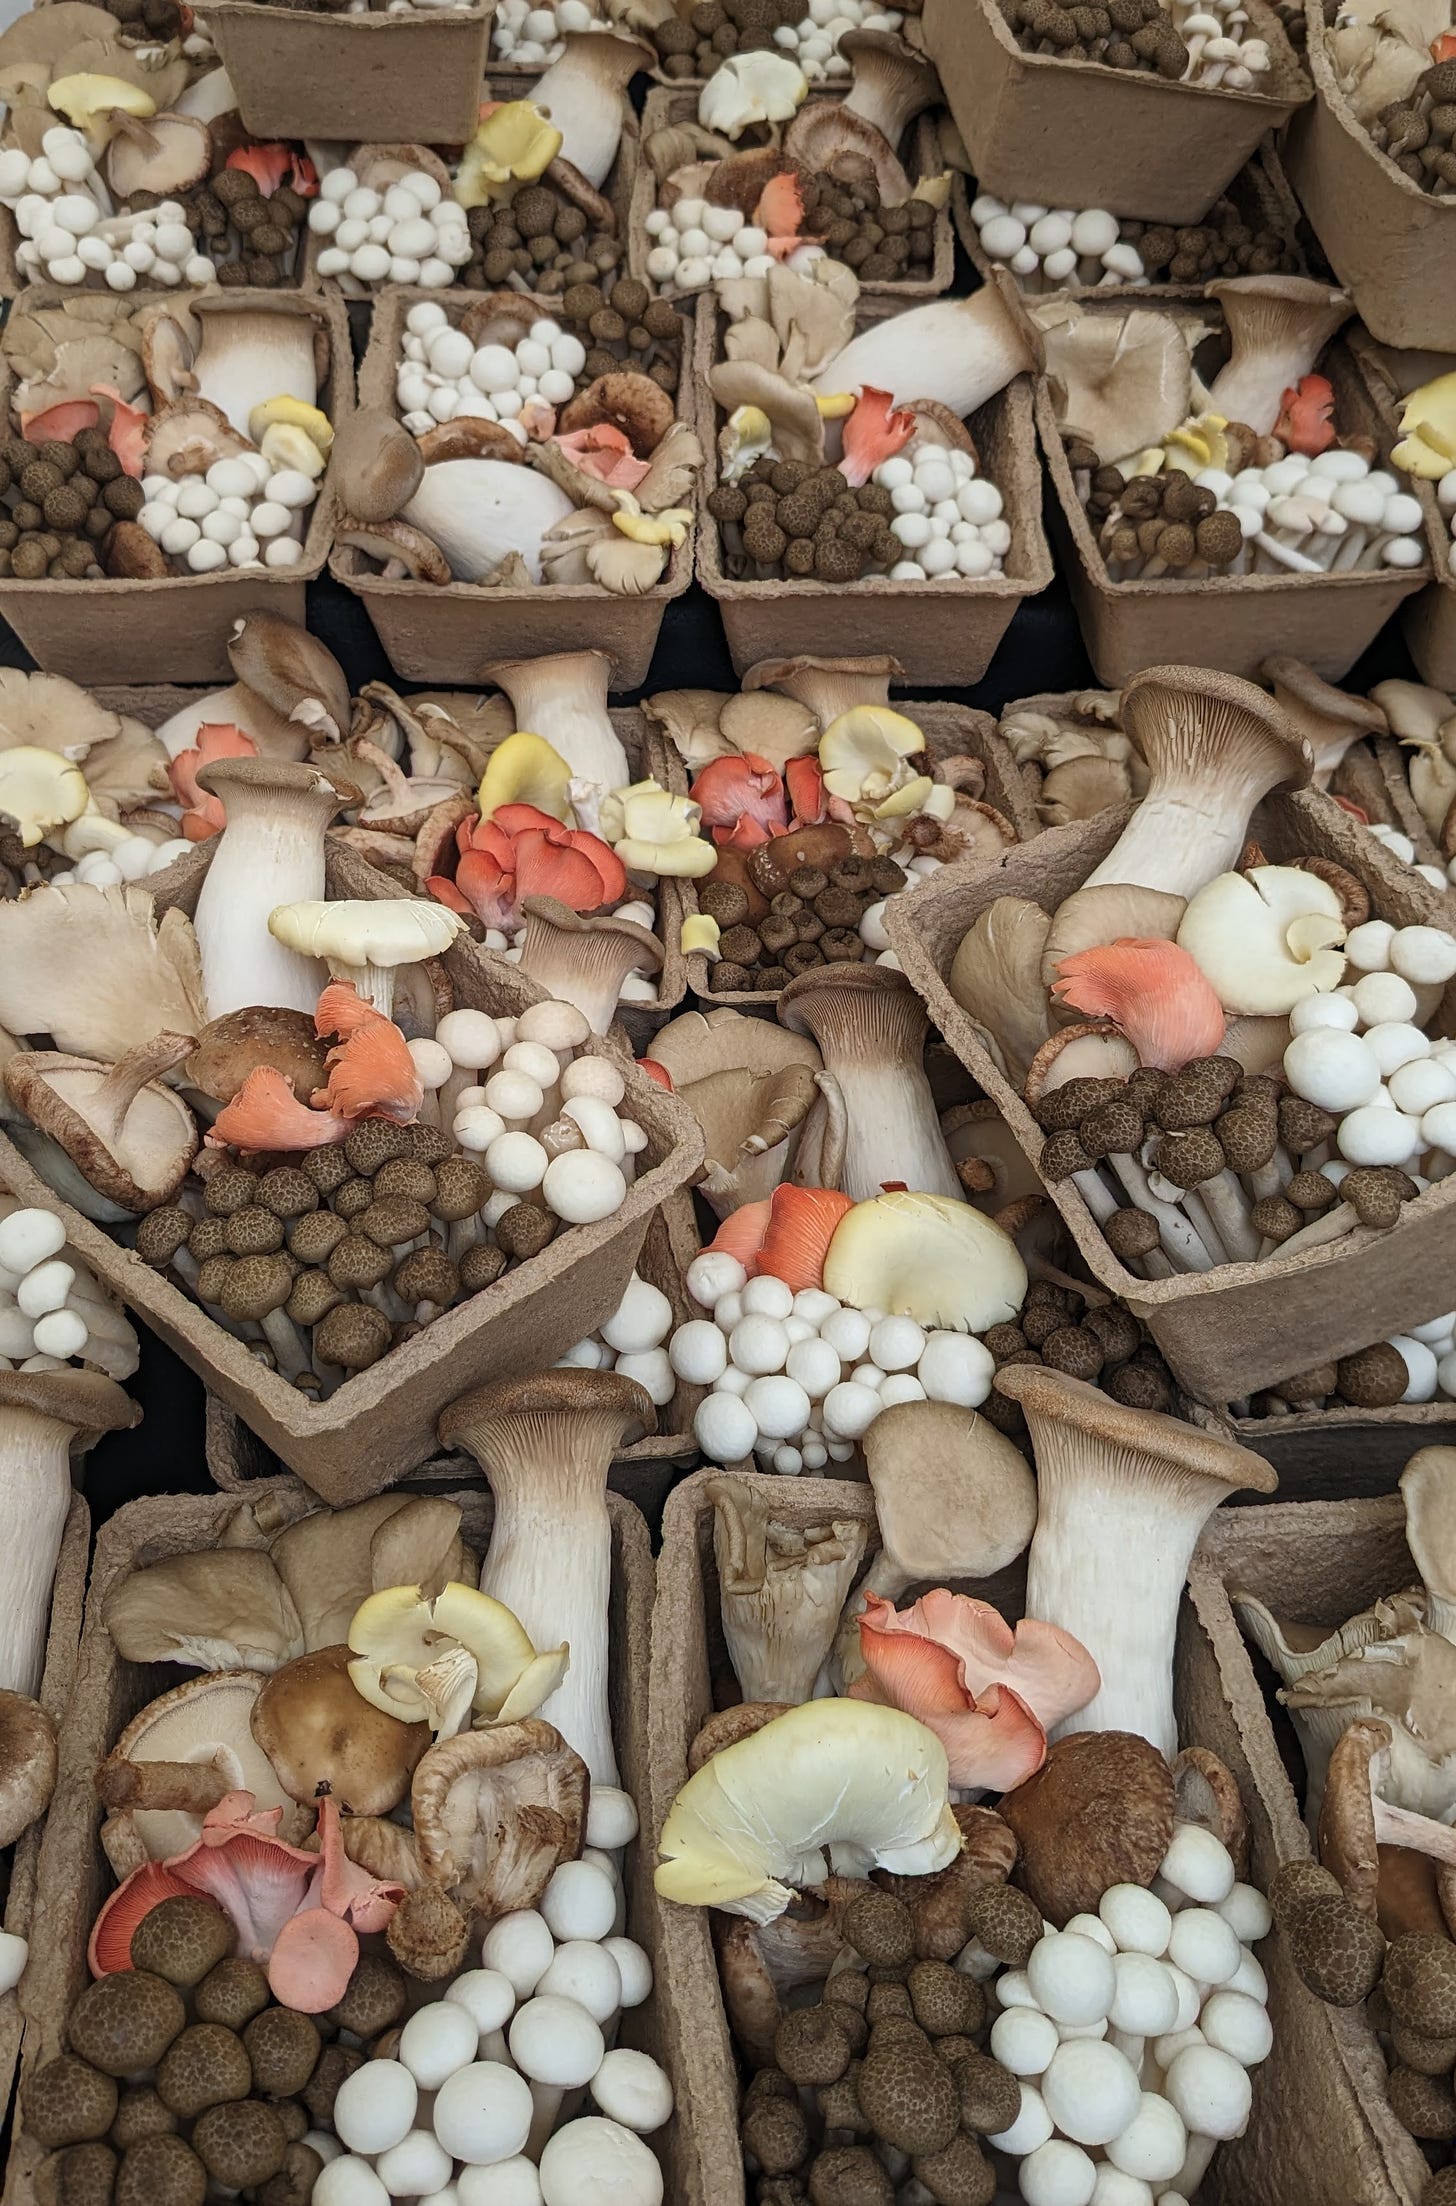 boxes of fungi at macclesfield market